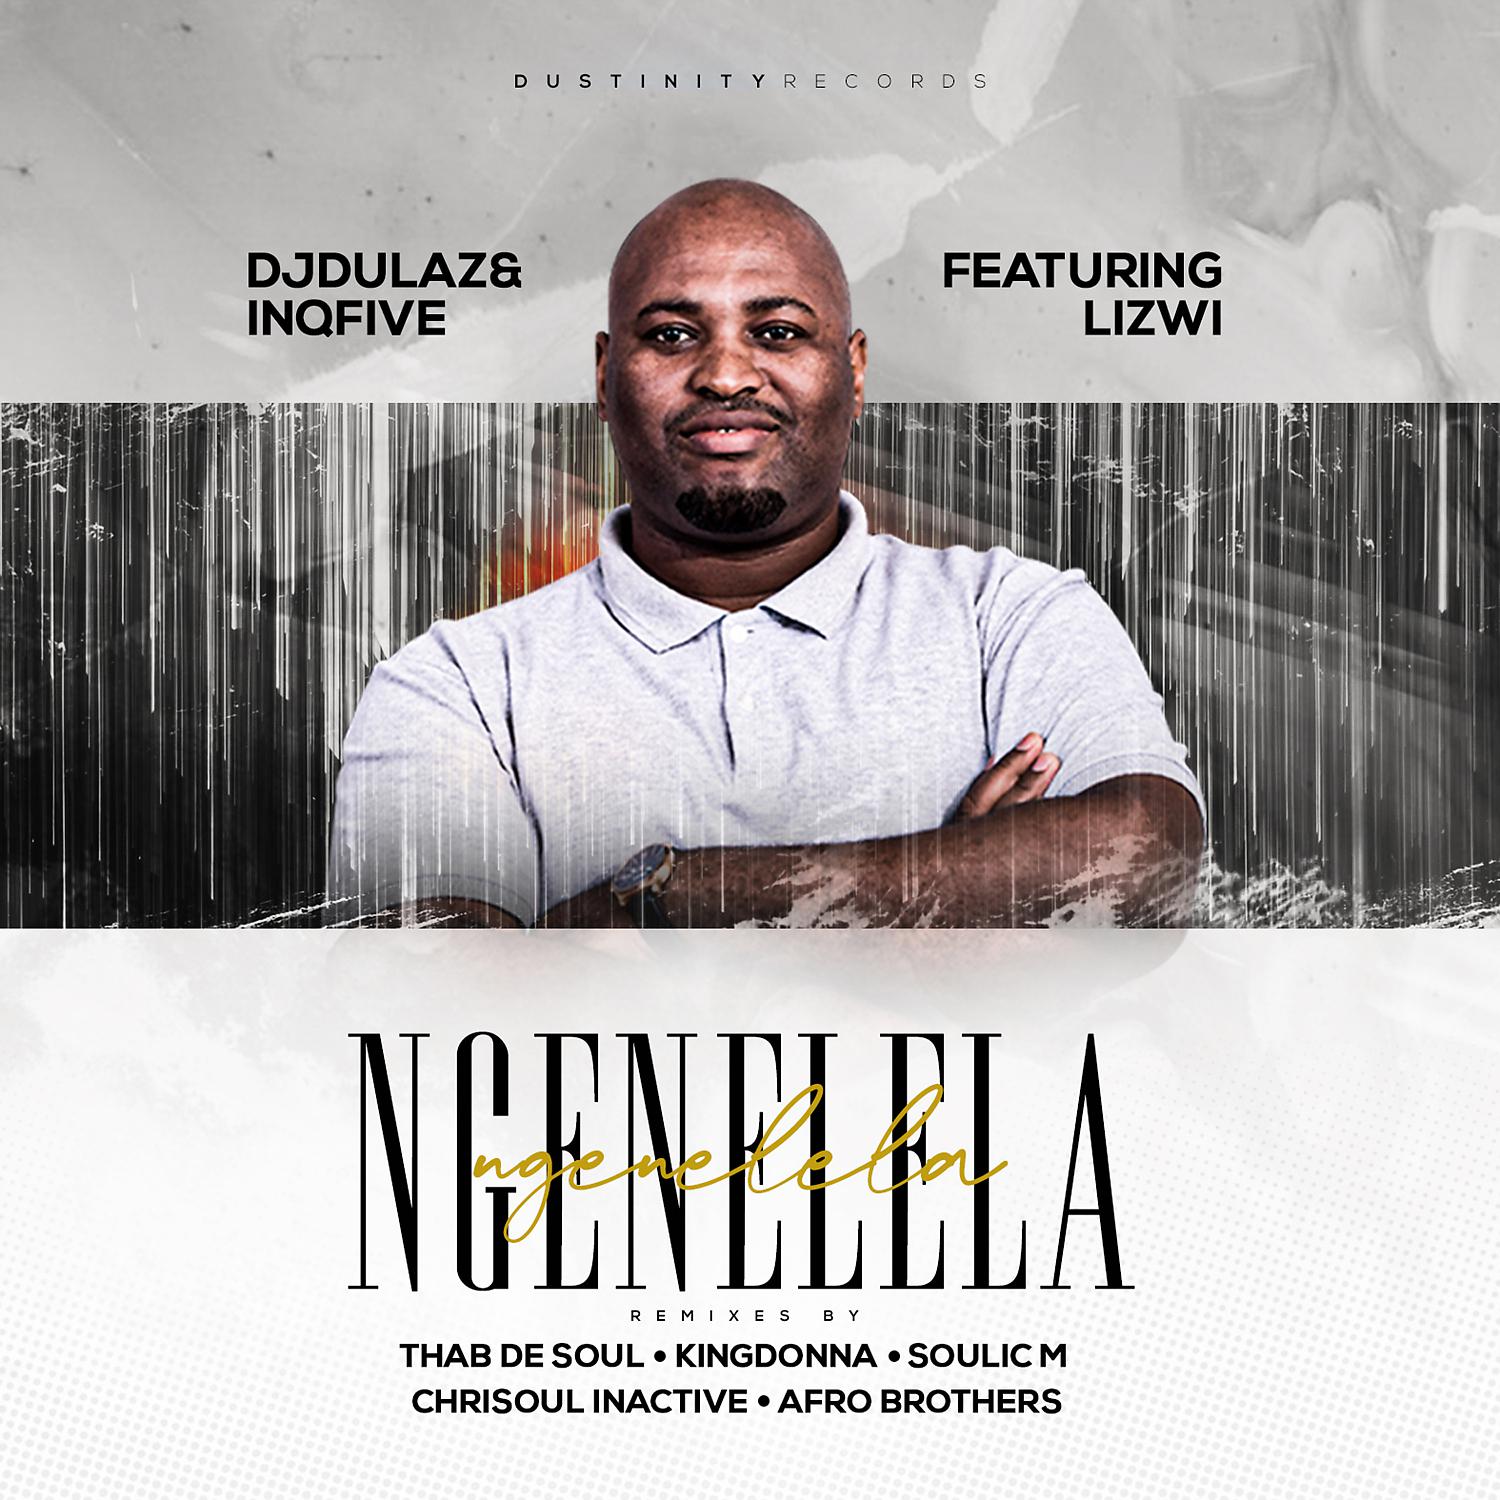 DJ Dulaz & InQfive & Lizwi & Soulic M - Ngenelela (feat. Lizwi) (Soulic M Remix)